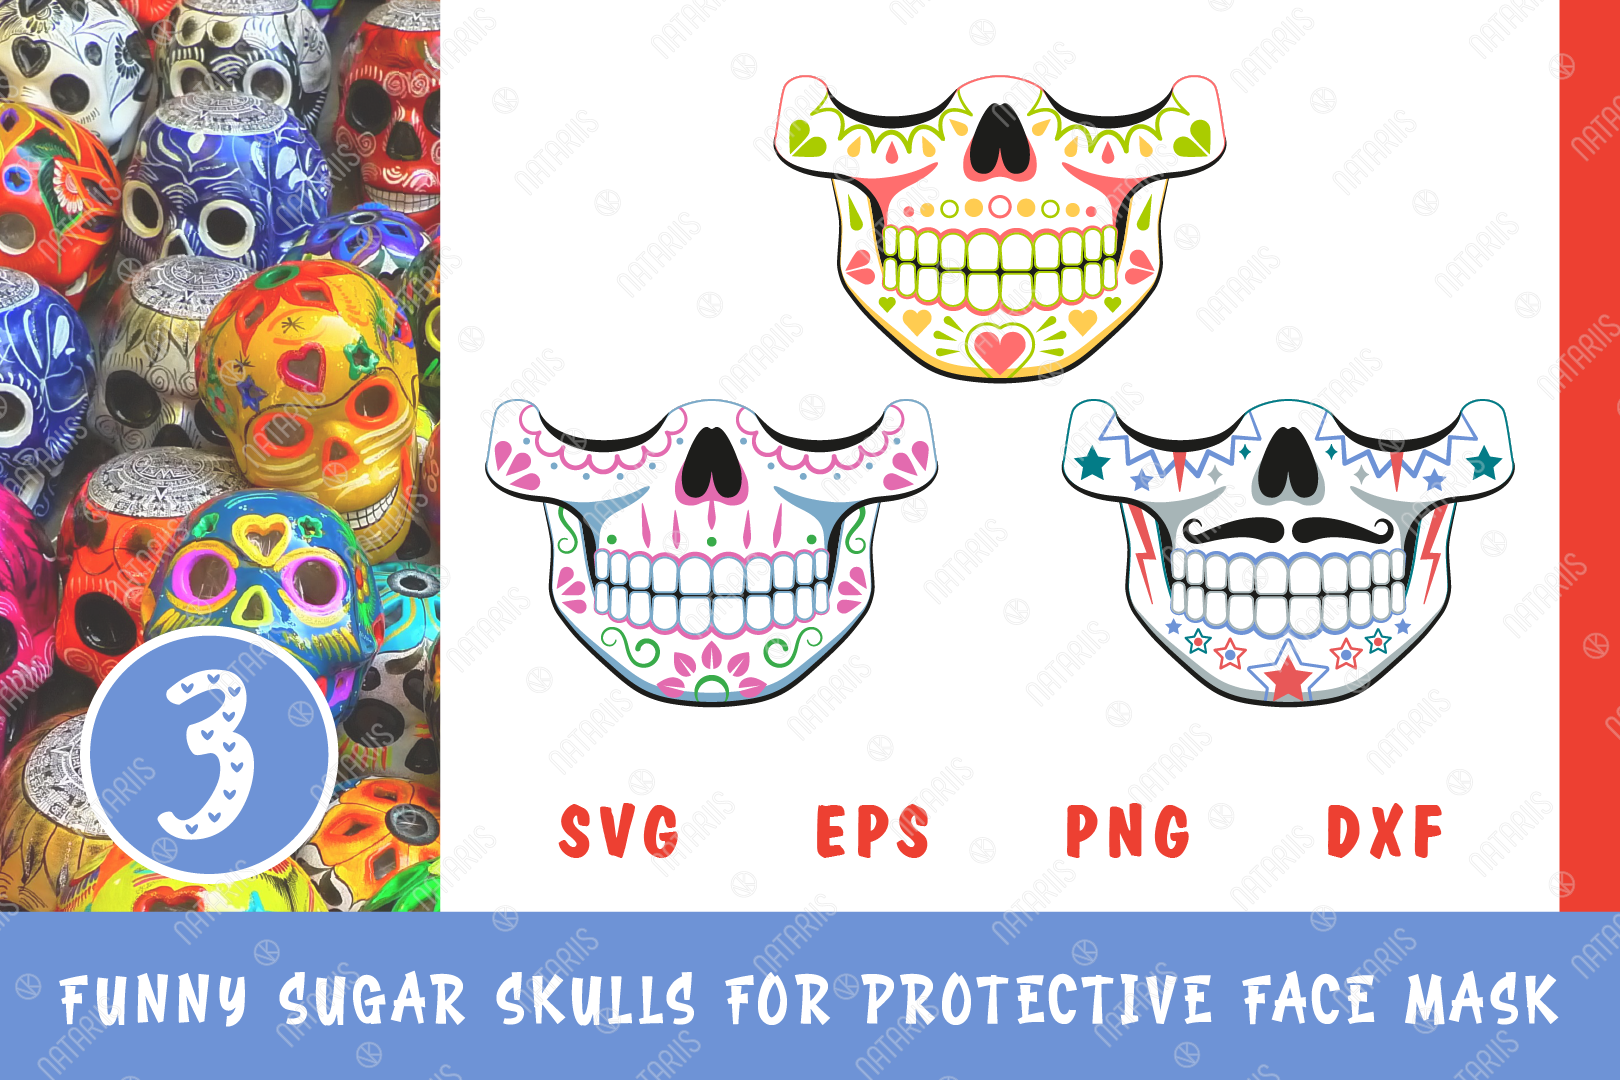 Download Svg Bundle 3 Funny Sugar Skulls Designs For Face Mask By Natariis Studio Thehungryjpeg Com